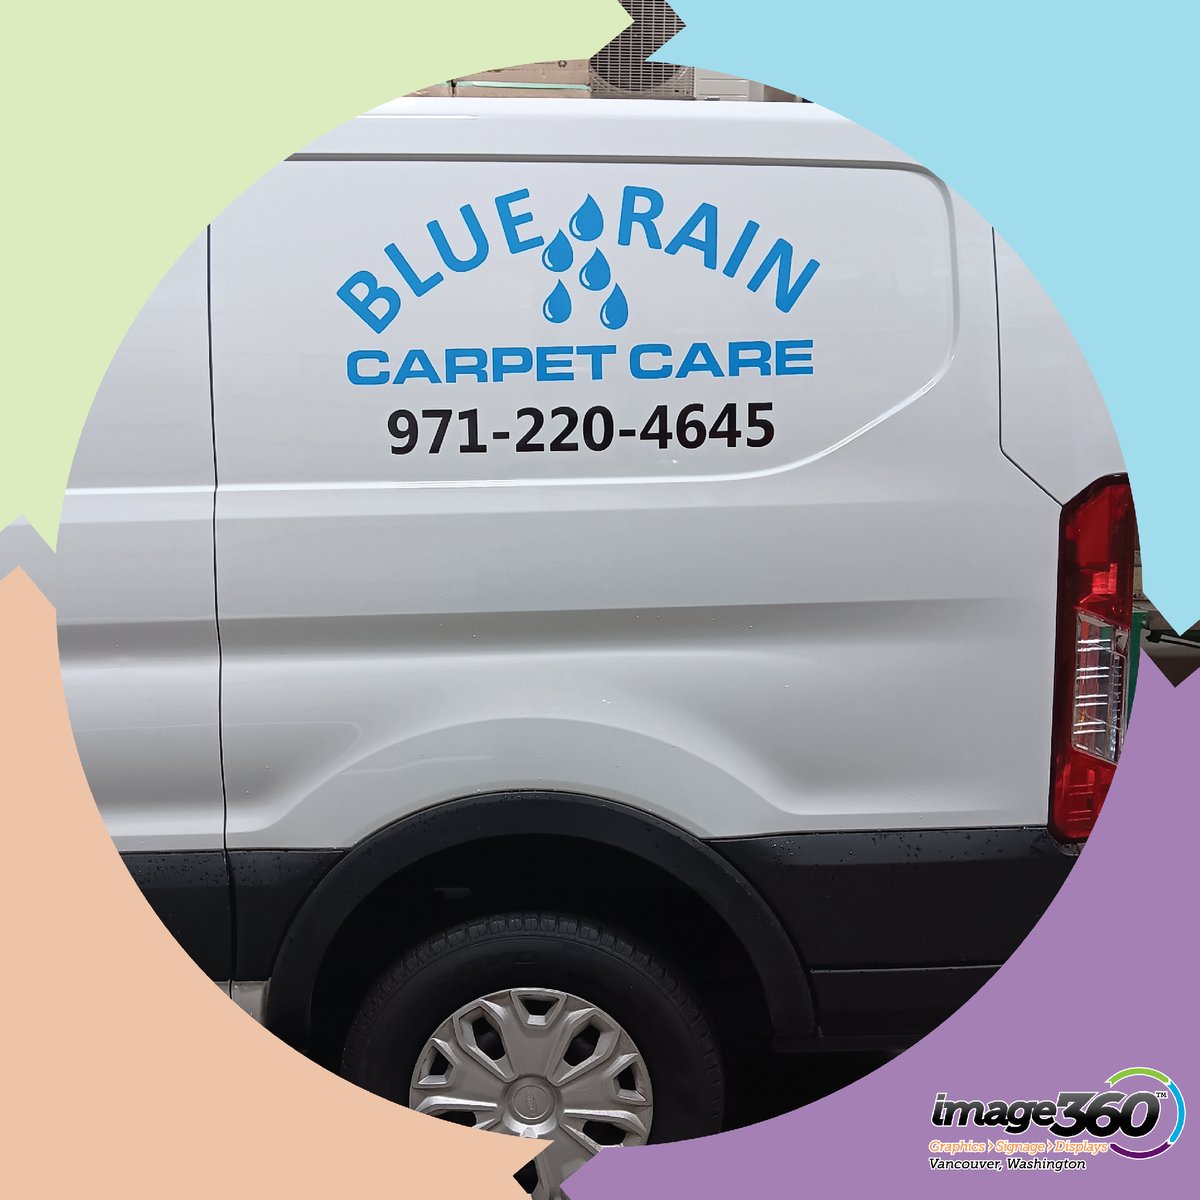 Spot graphics for Blue Rain Carpet Care.
#image360 #image360vancouver #vancouverwa #clarkcounty #portland #signage #graphics #displays #vehiclegraphics #vehiclegraphics #branding #marketing #localcompany #smallbusiness #localbusiness #sign #printdesign #graphicdesign